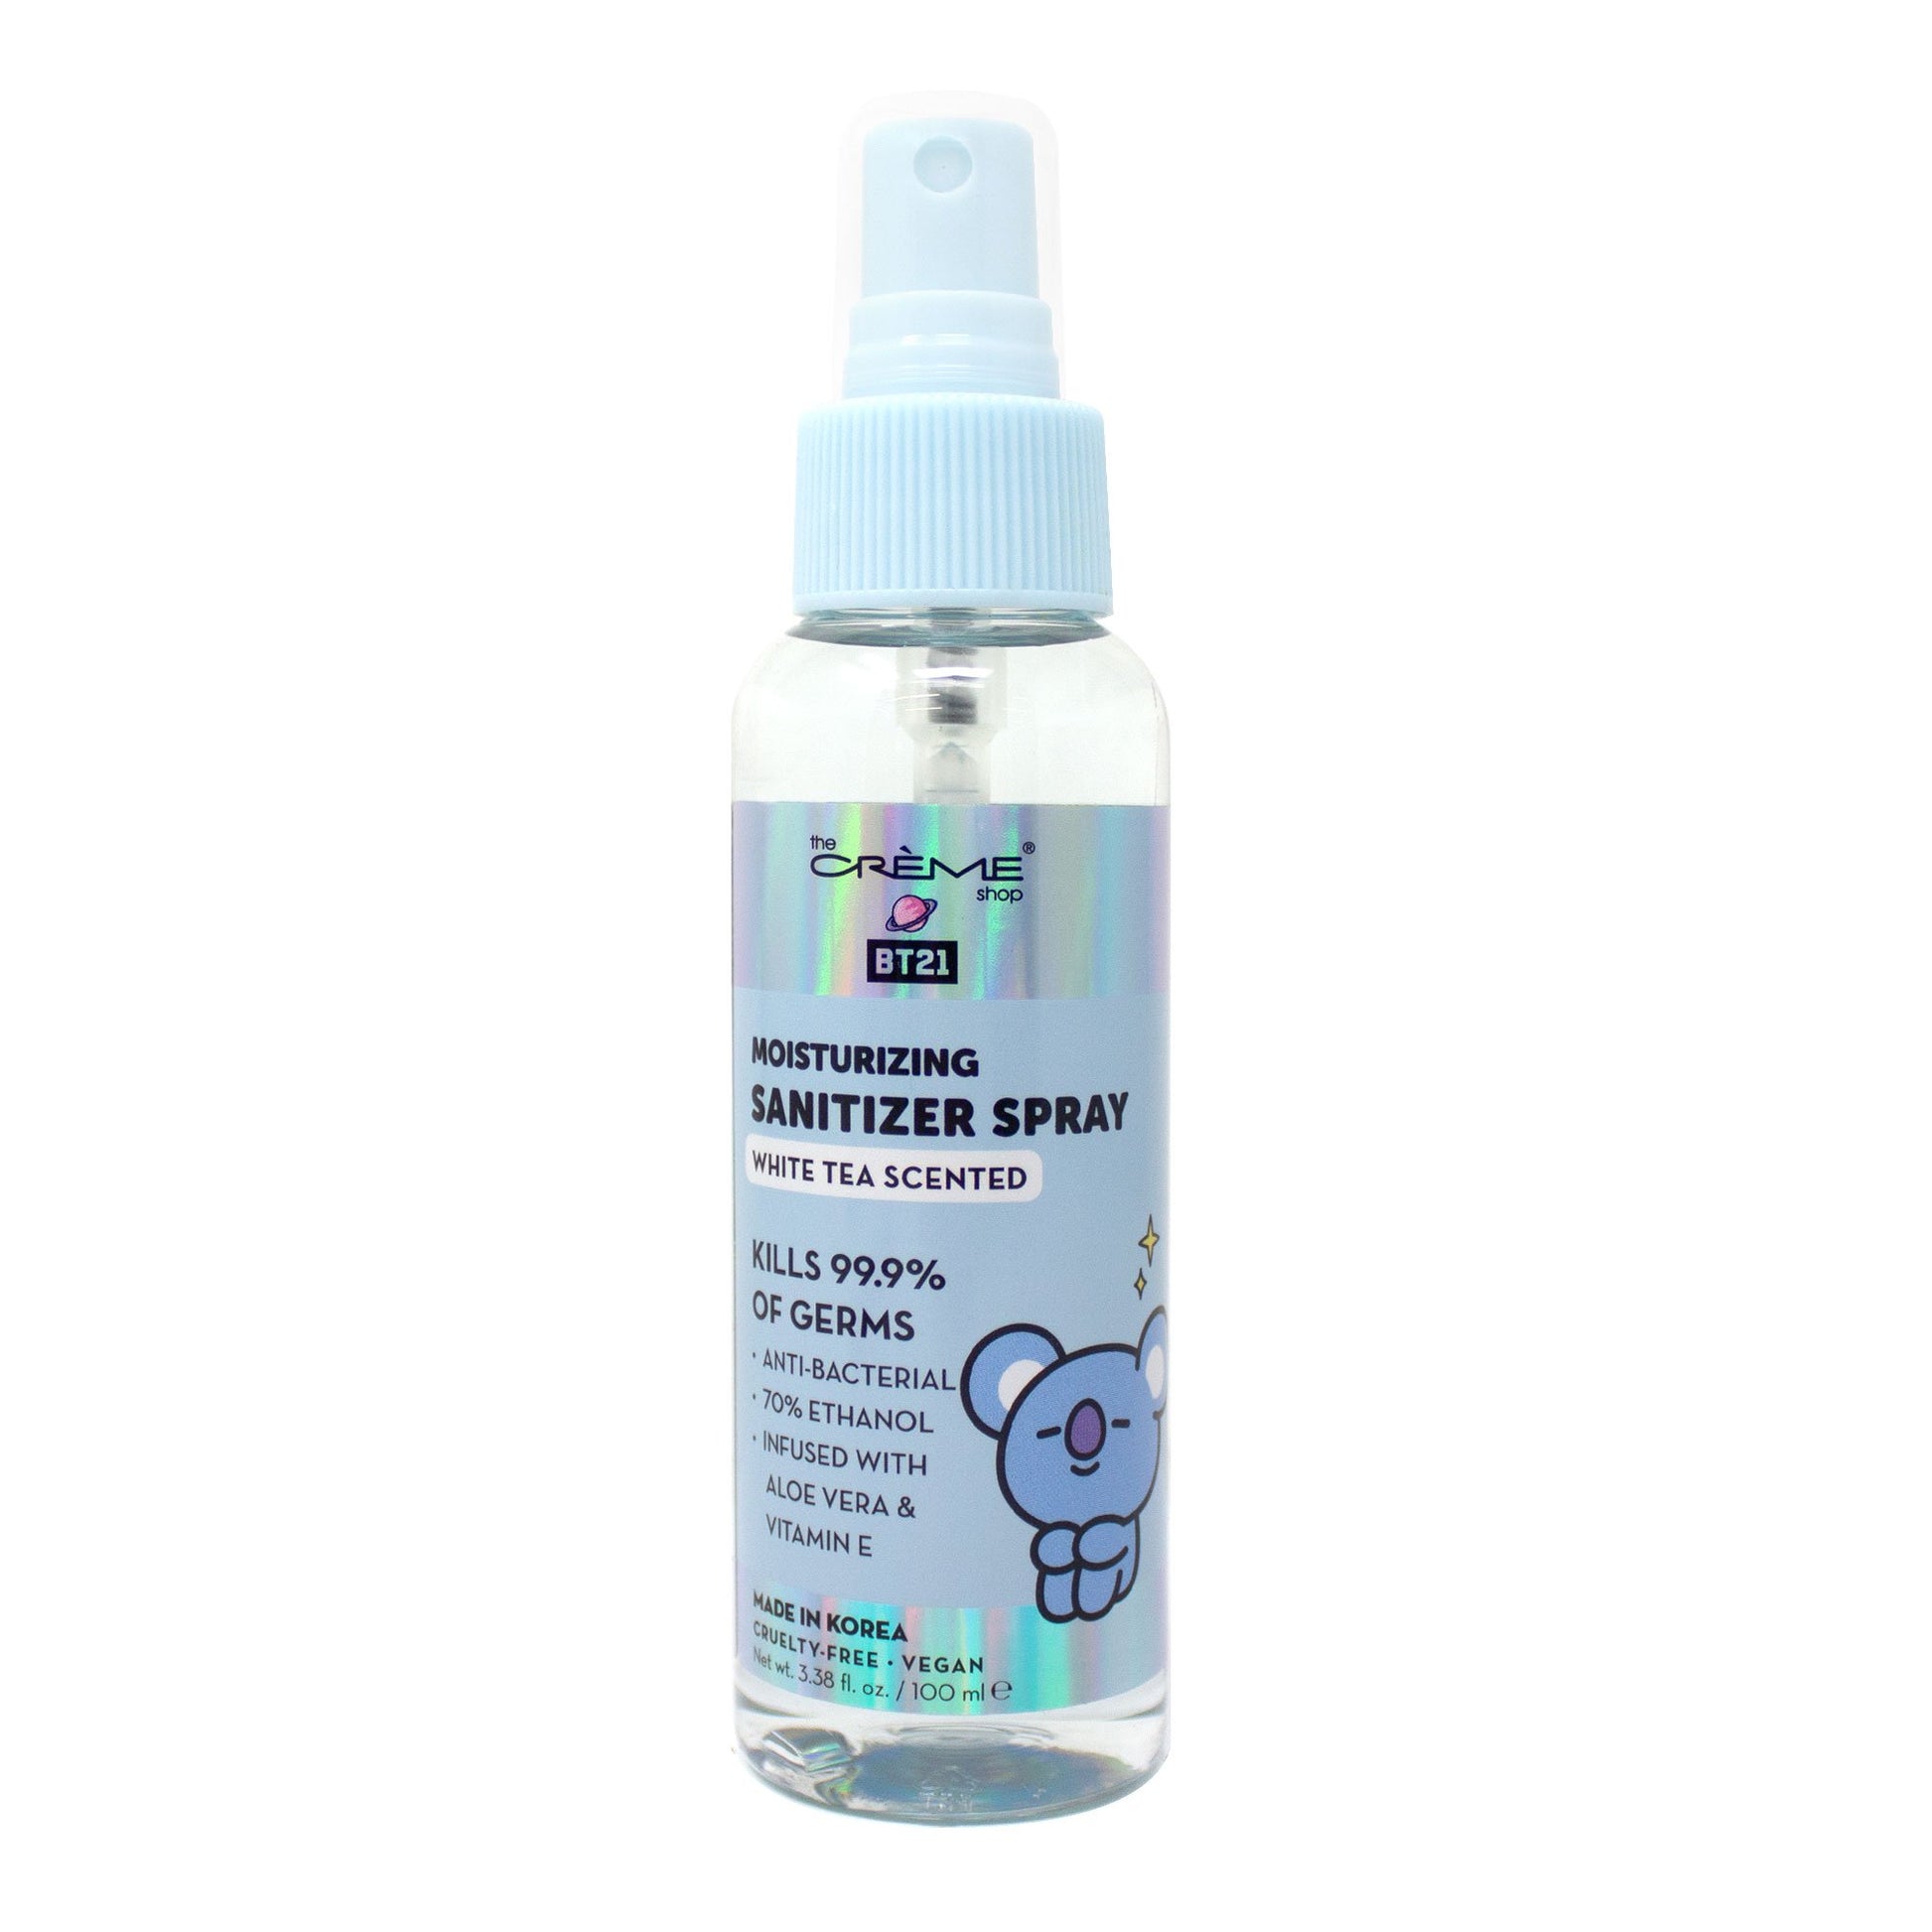 KOYA Sanitizing Spray (White Tea Scented) Sanitizer Sprays - The Crème Shop x BT21 